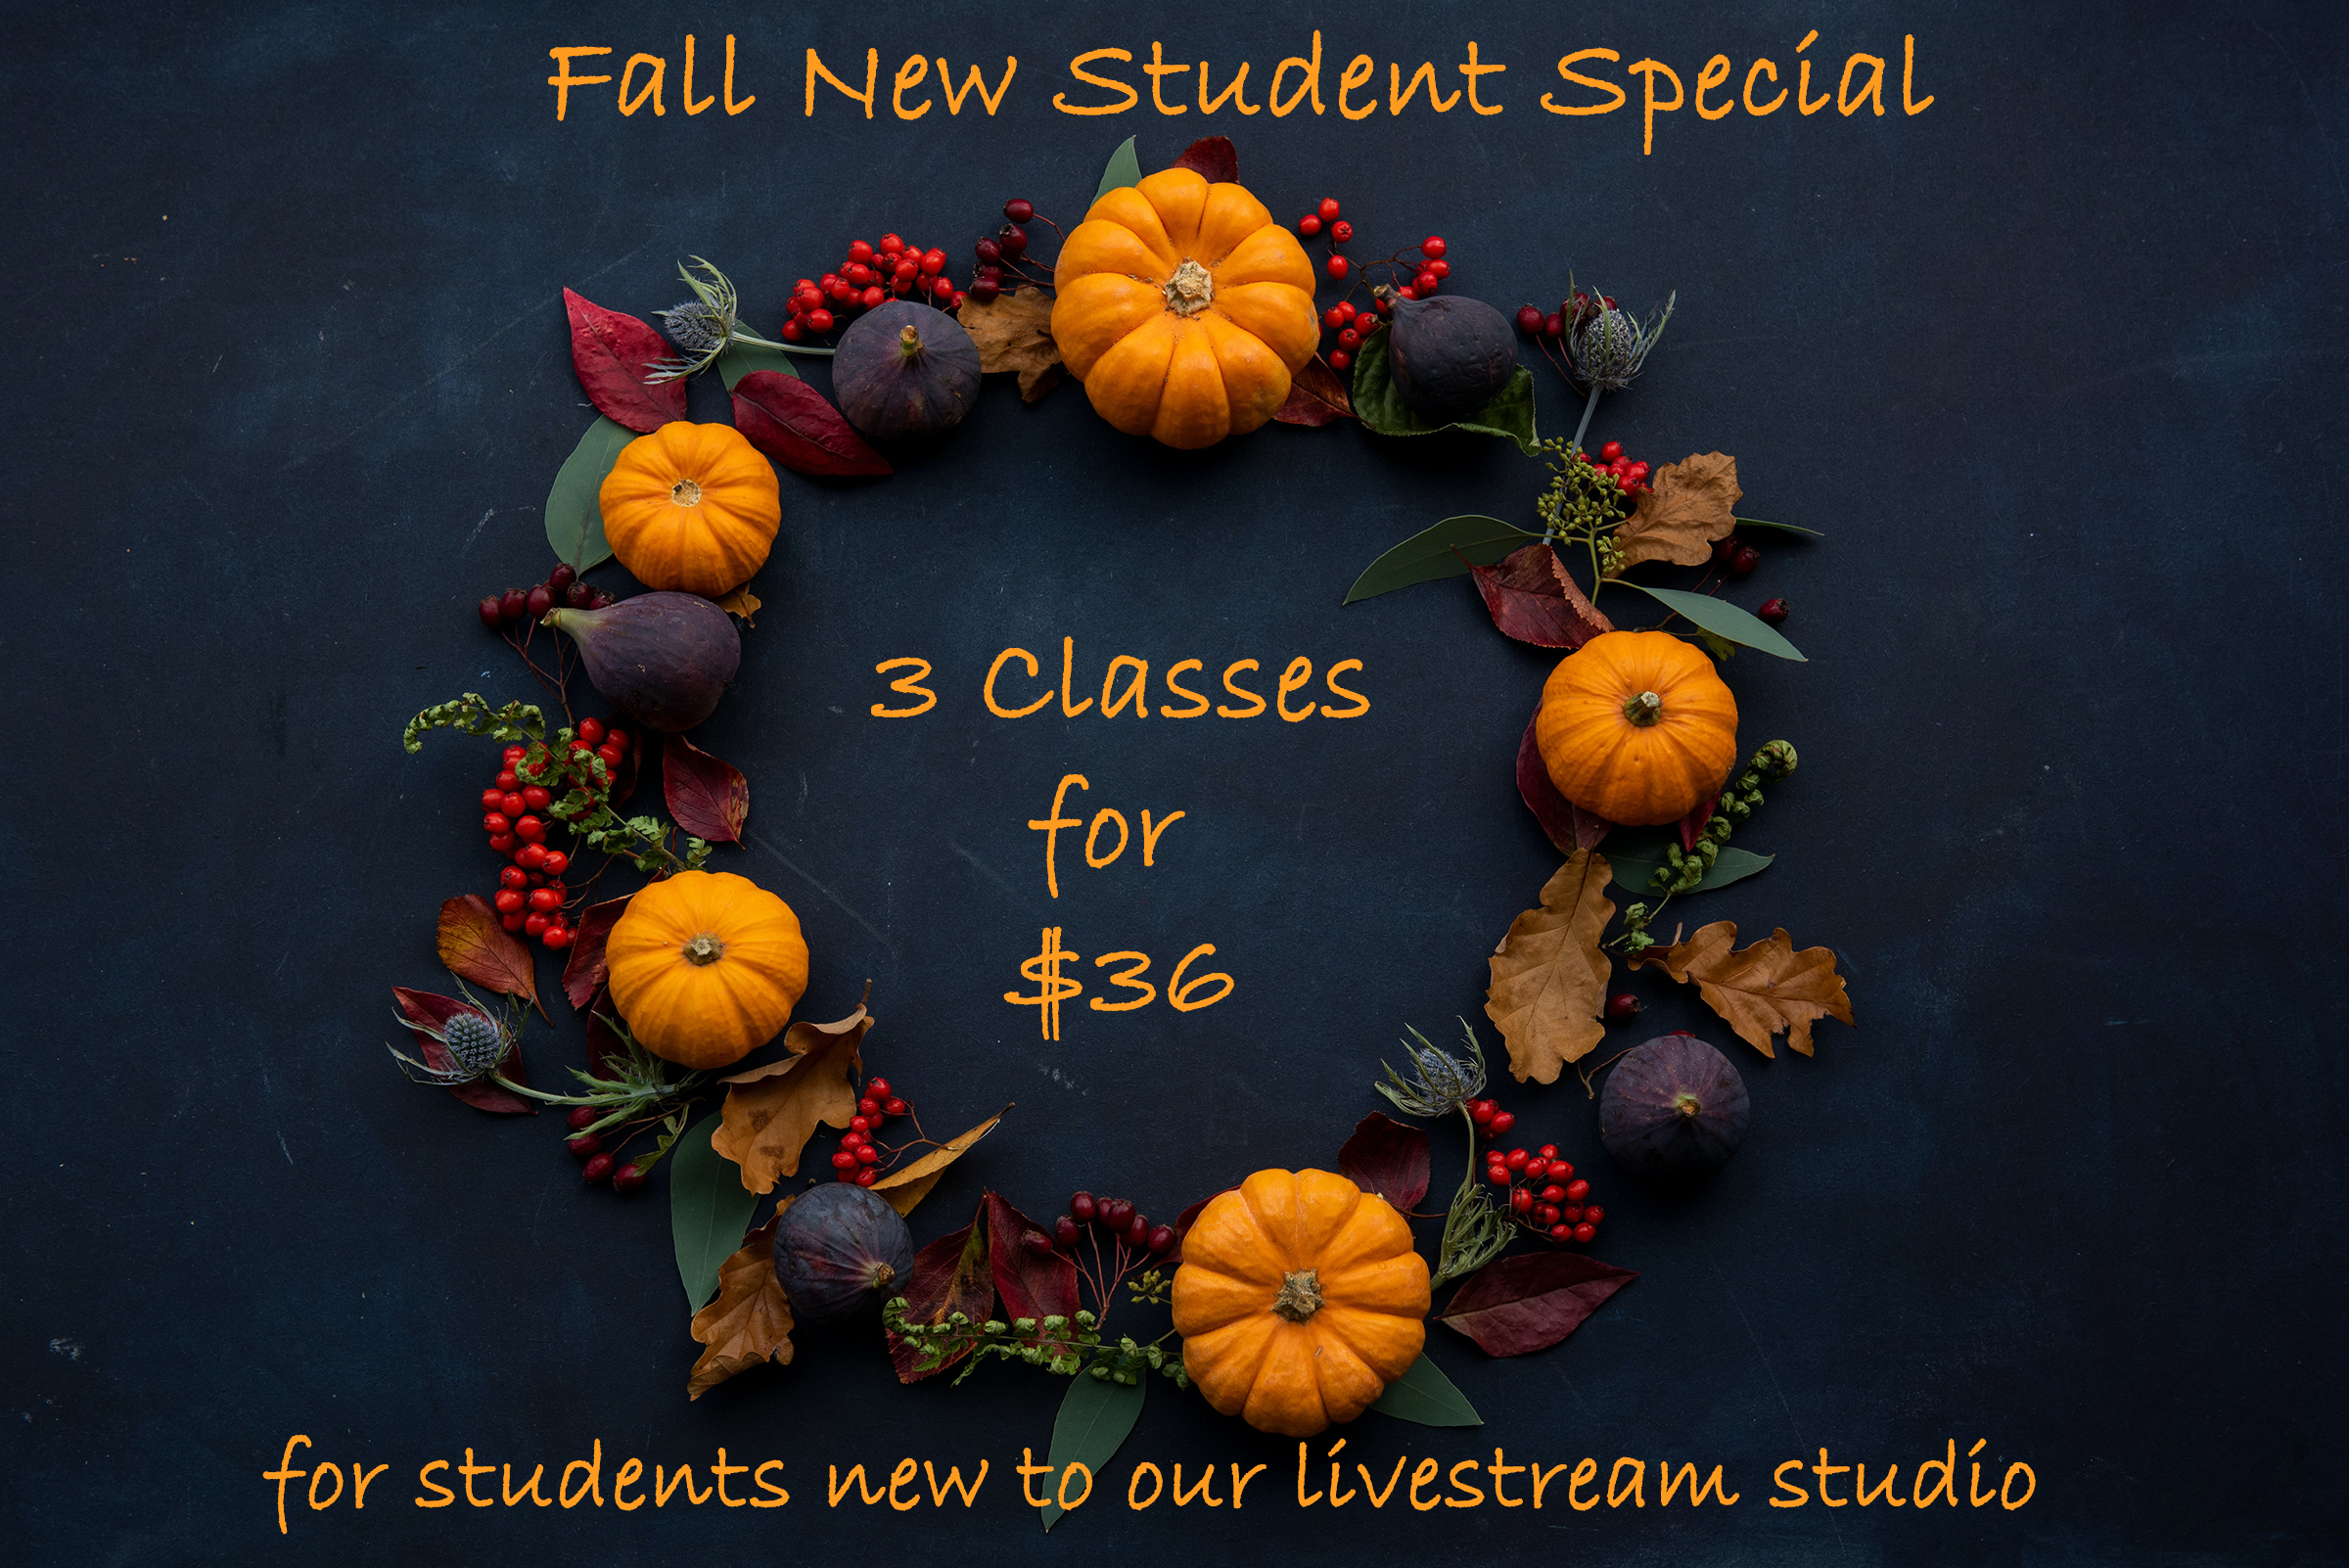 Fall Livestream New Student Special